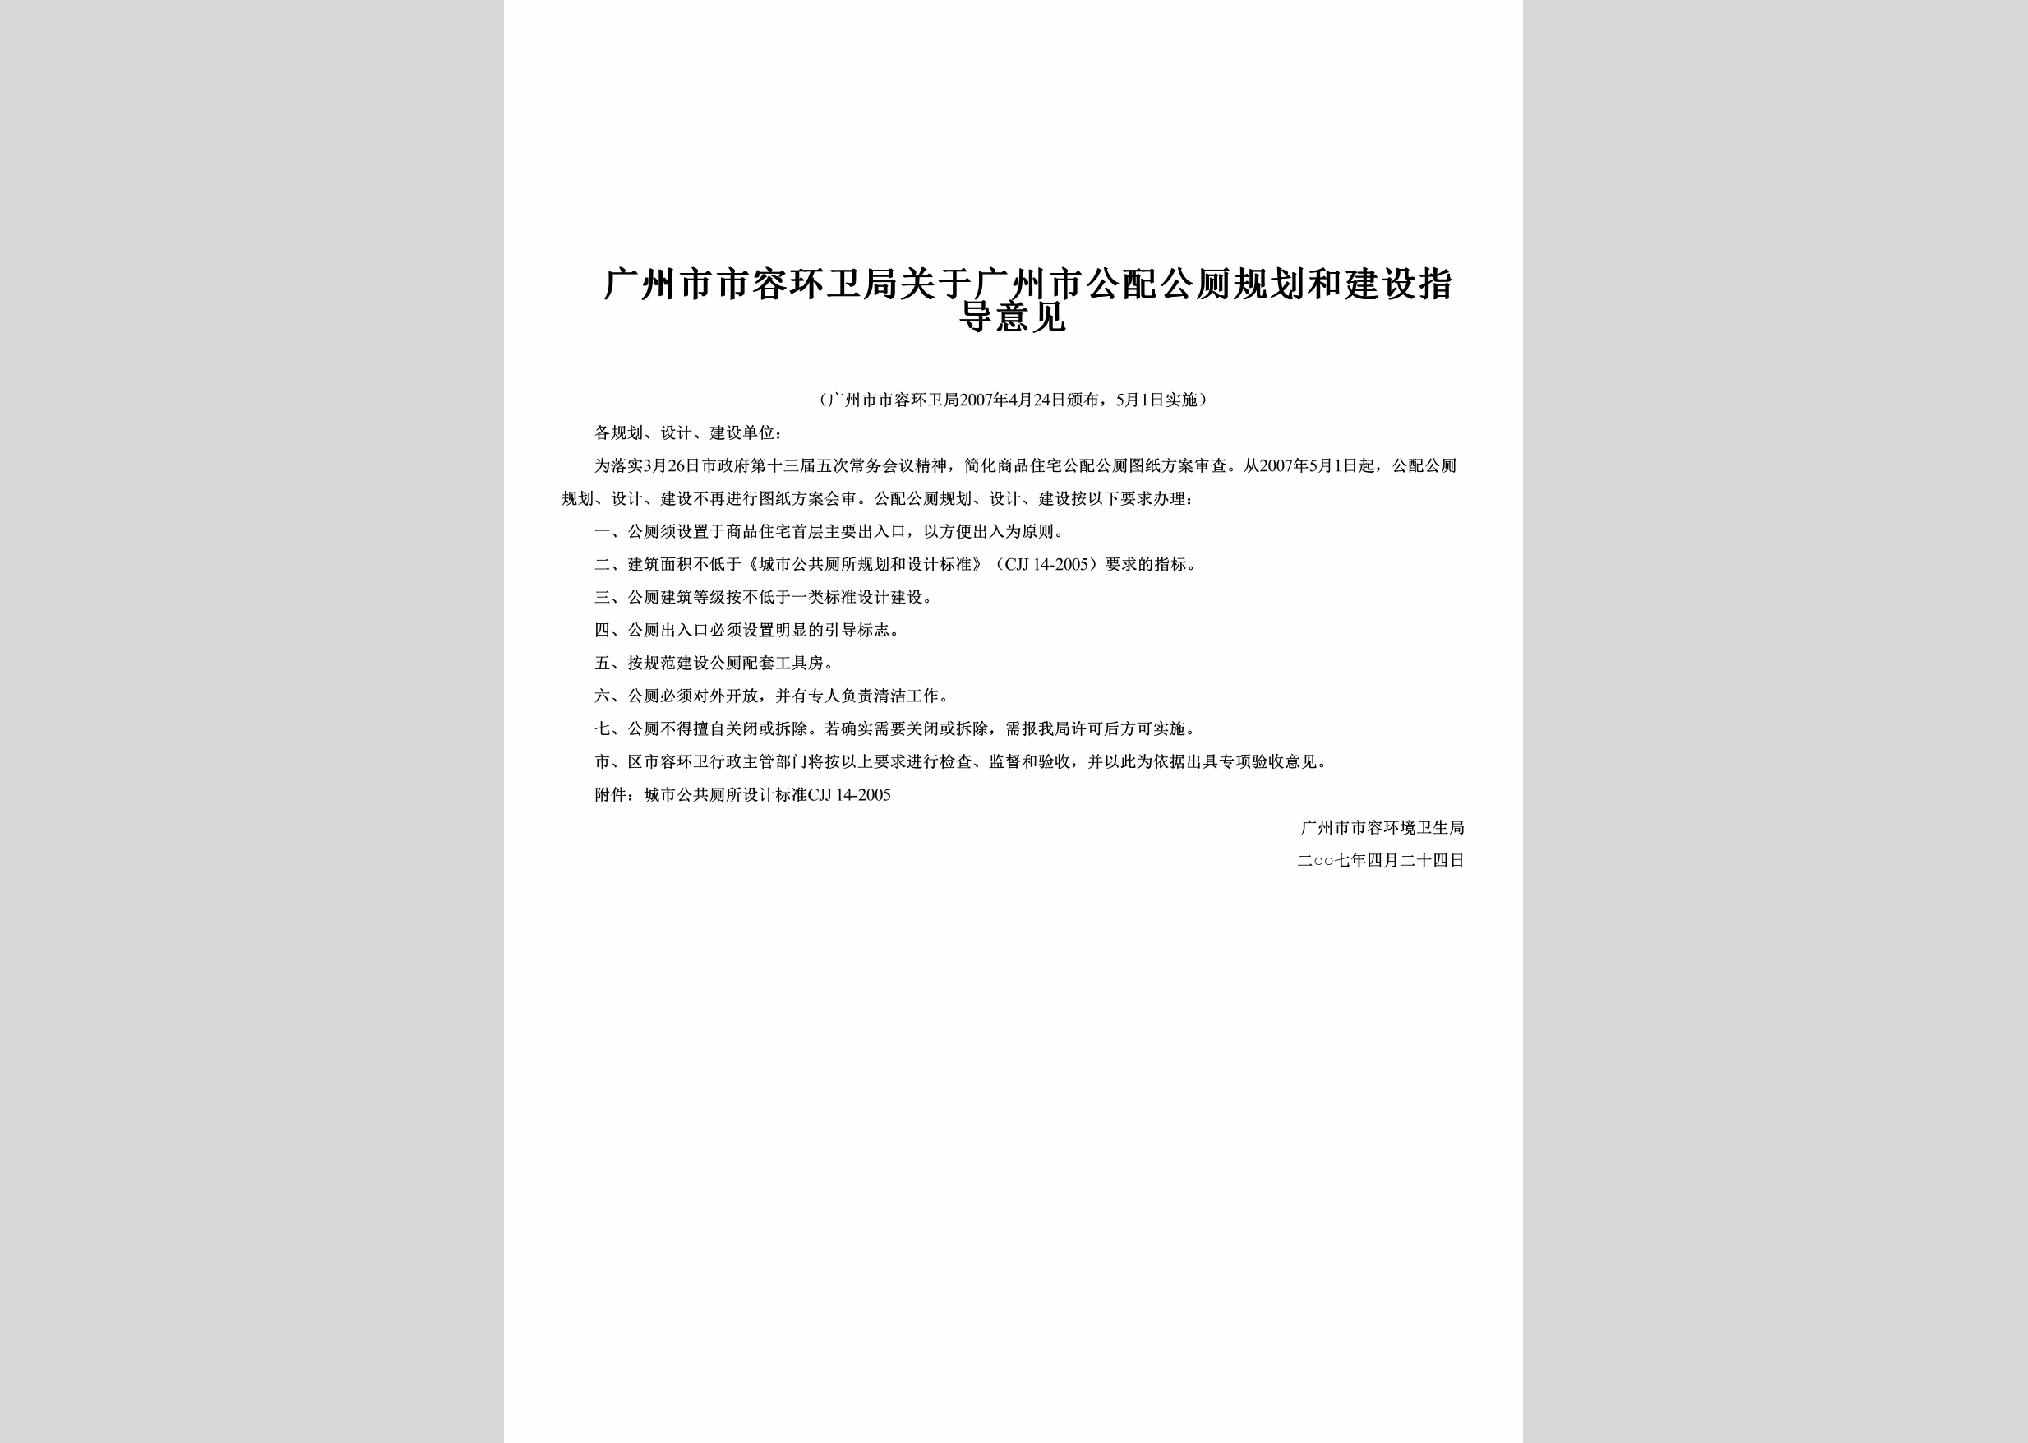 GD-GZSGPGCG-2007：关于广州市公配公厕规划和建设指导意见